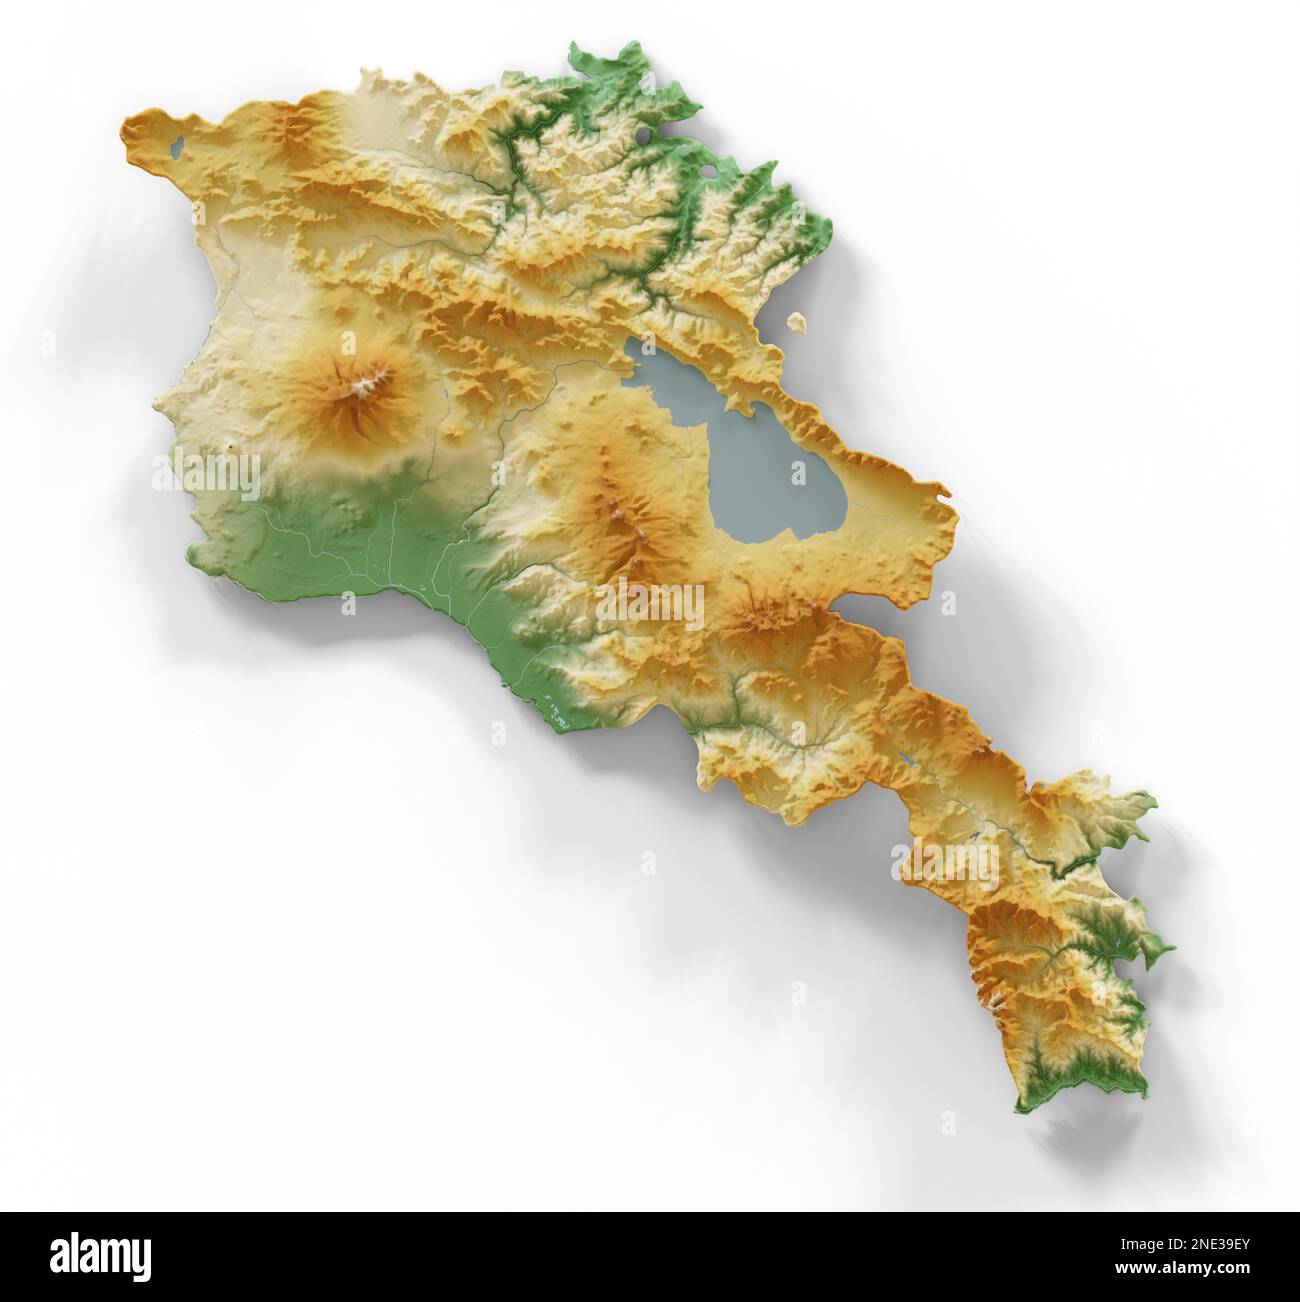 9,690 Armenia Map Images, Stock Photos, 3D objects, & Vectors